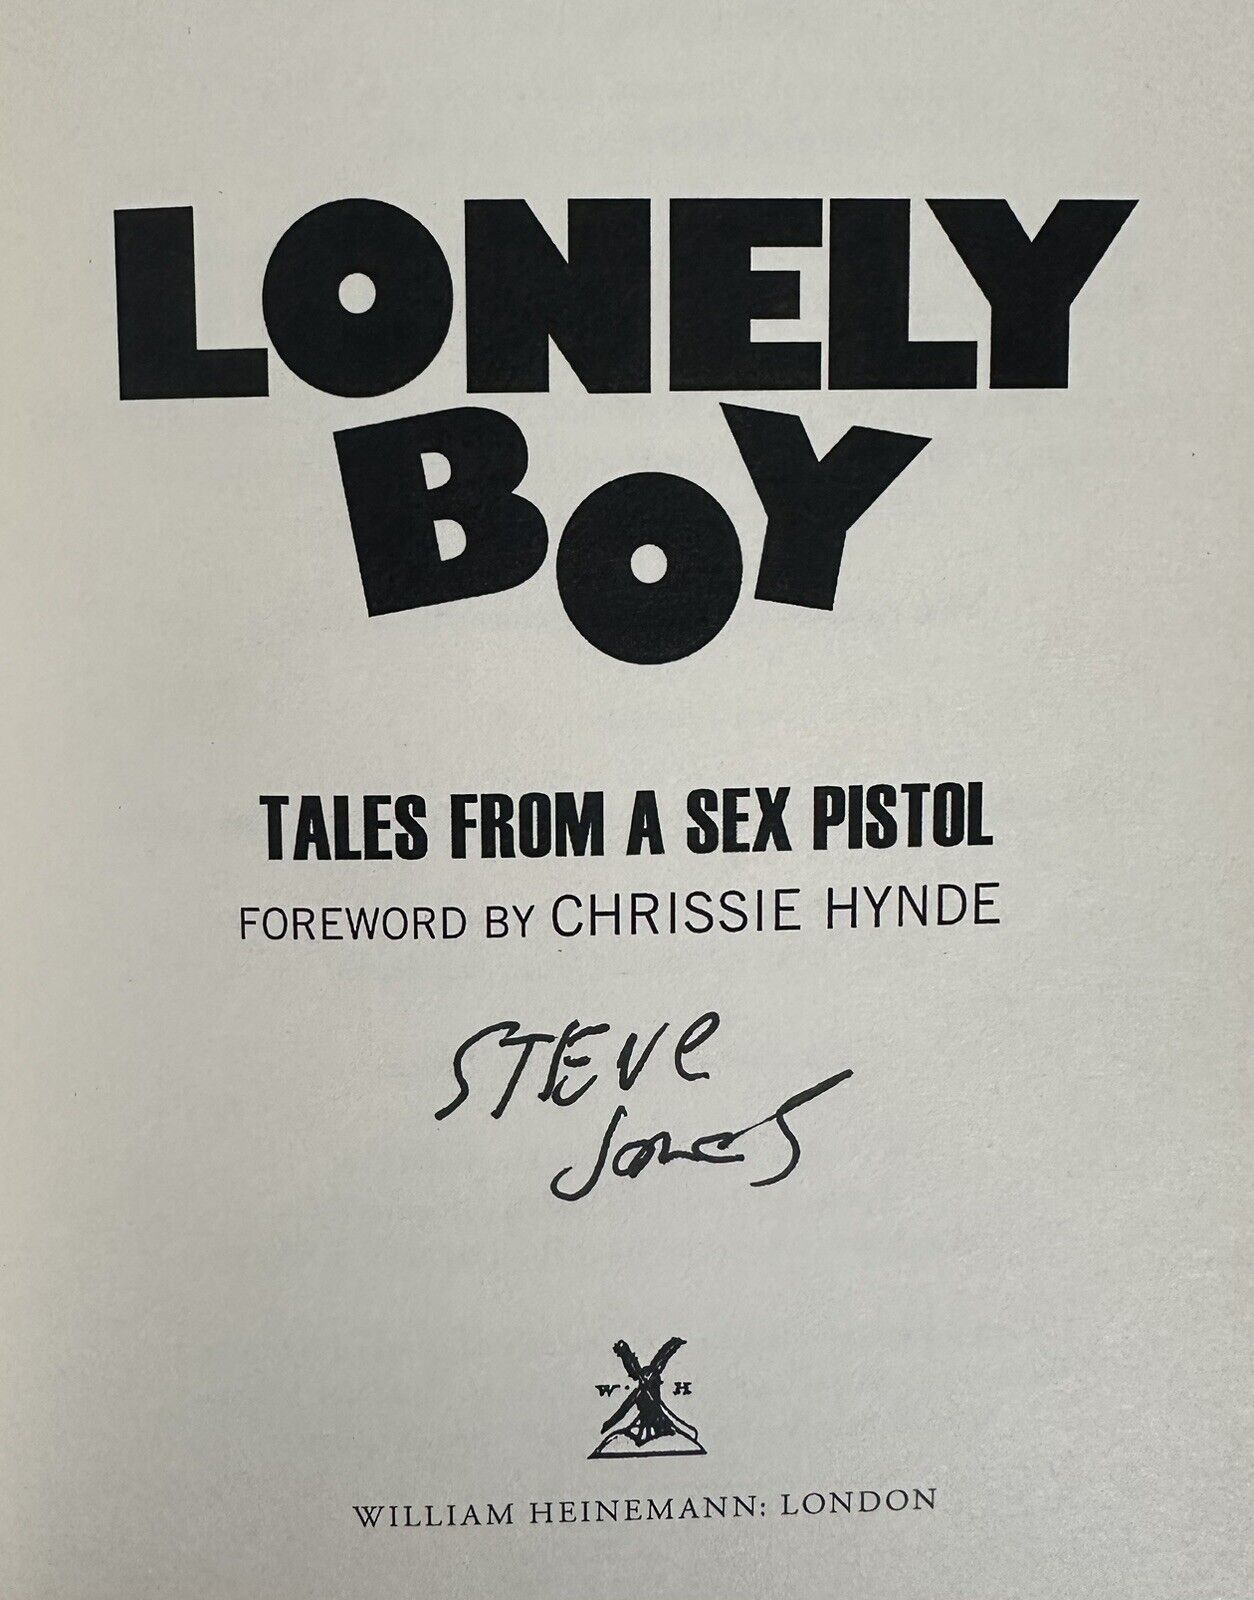 SEX PISTOLS STEVE JONES SIGNED LONELY BOY HARDBACK BOOK TALES FROM A SEX PISTOL